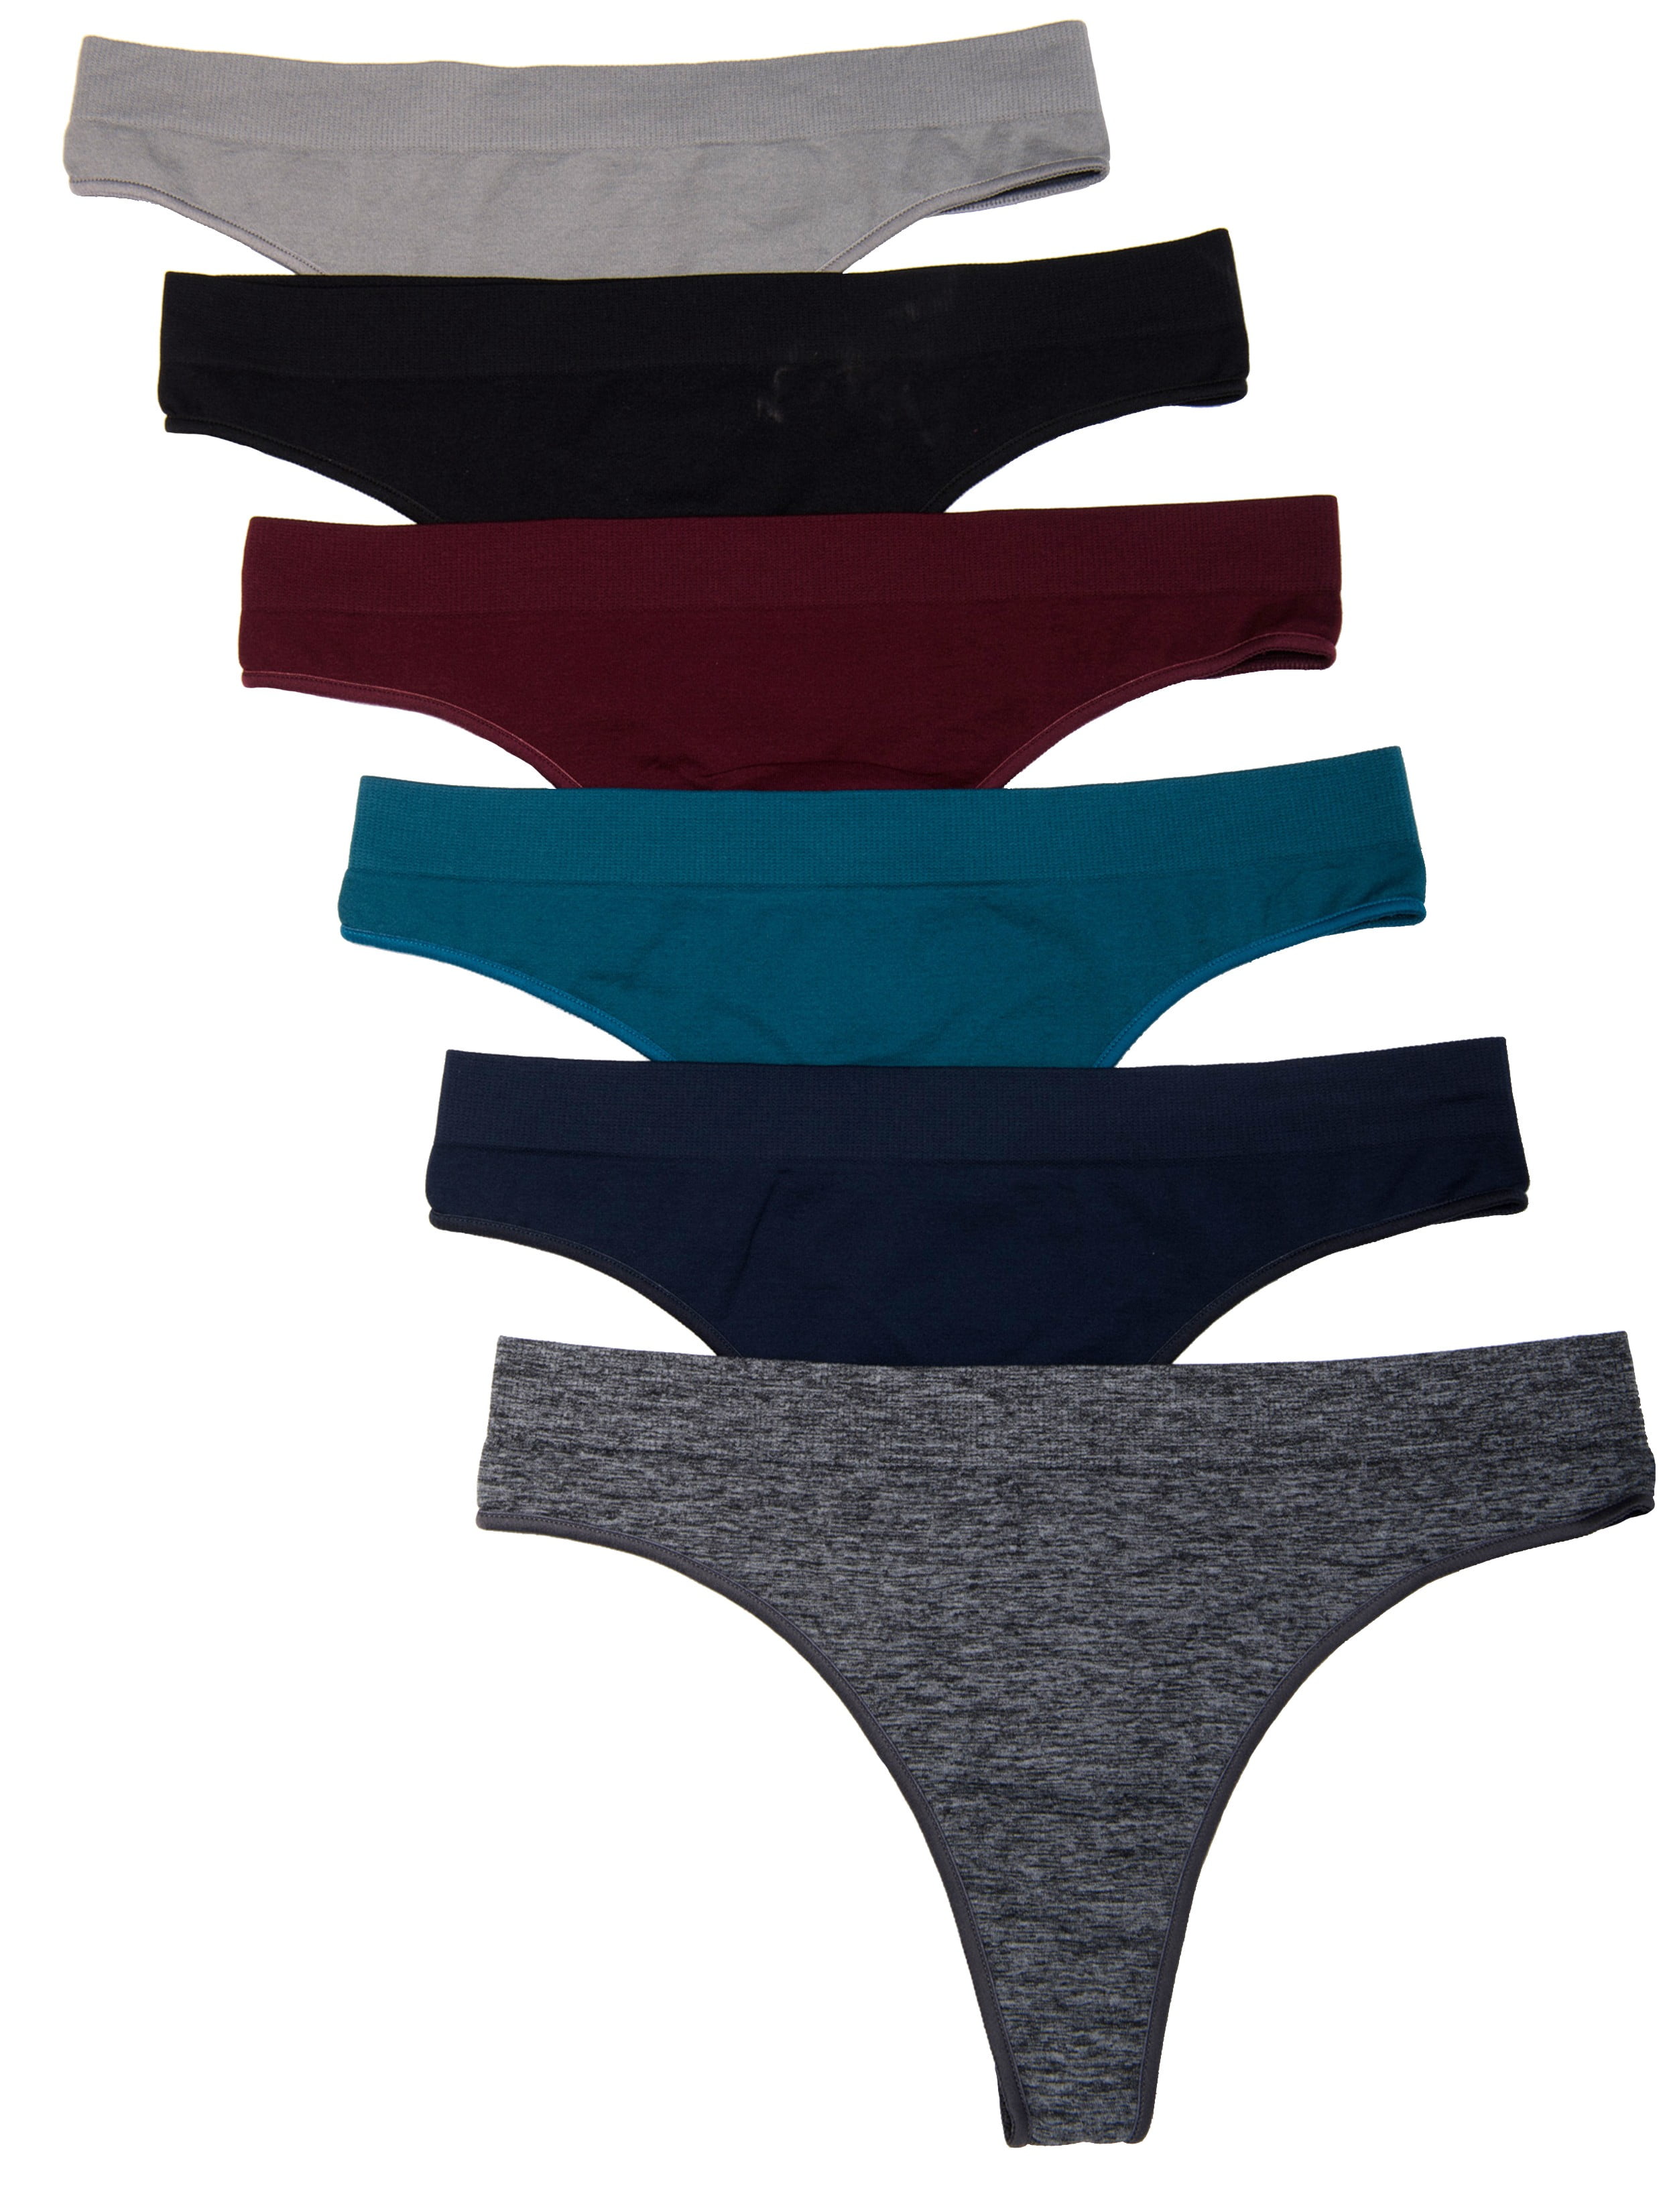 Kalon 6 Pack Women's Nylon Spandex Thong Underwear, Almond, XX